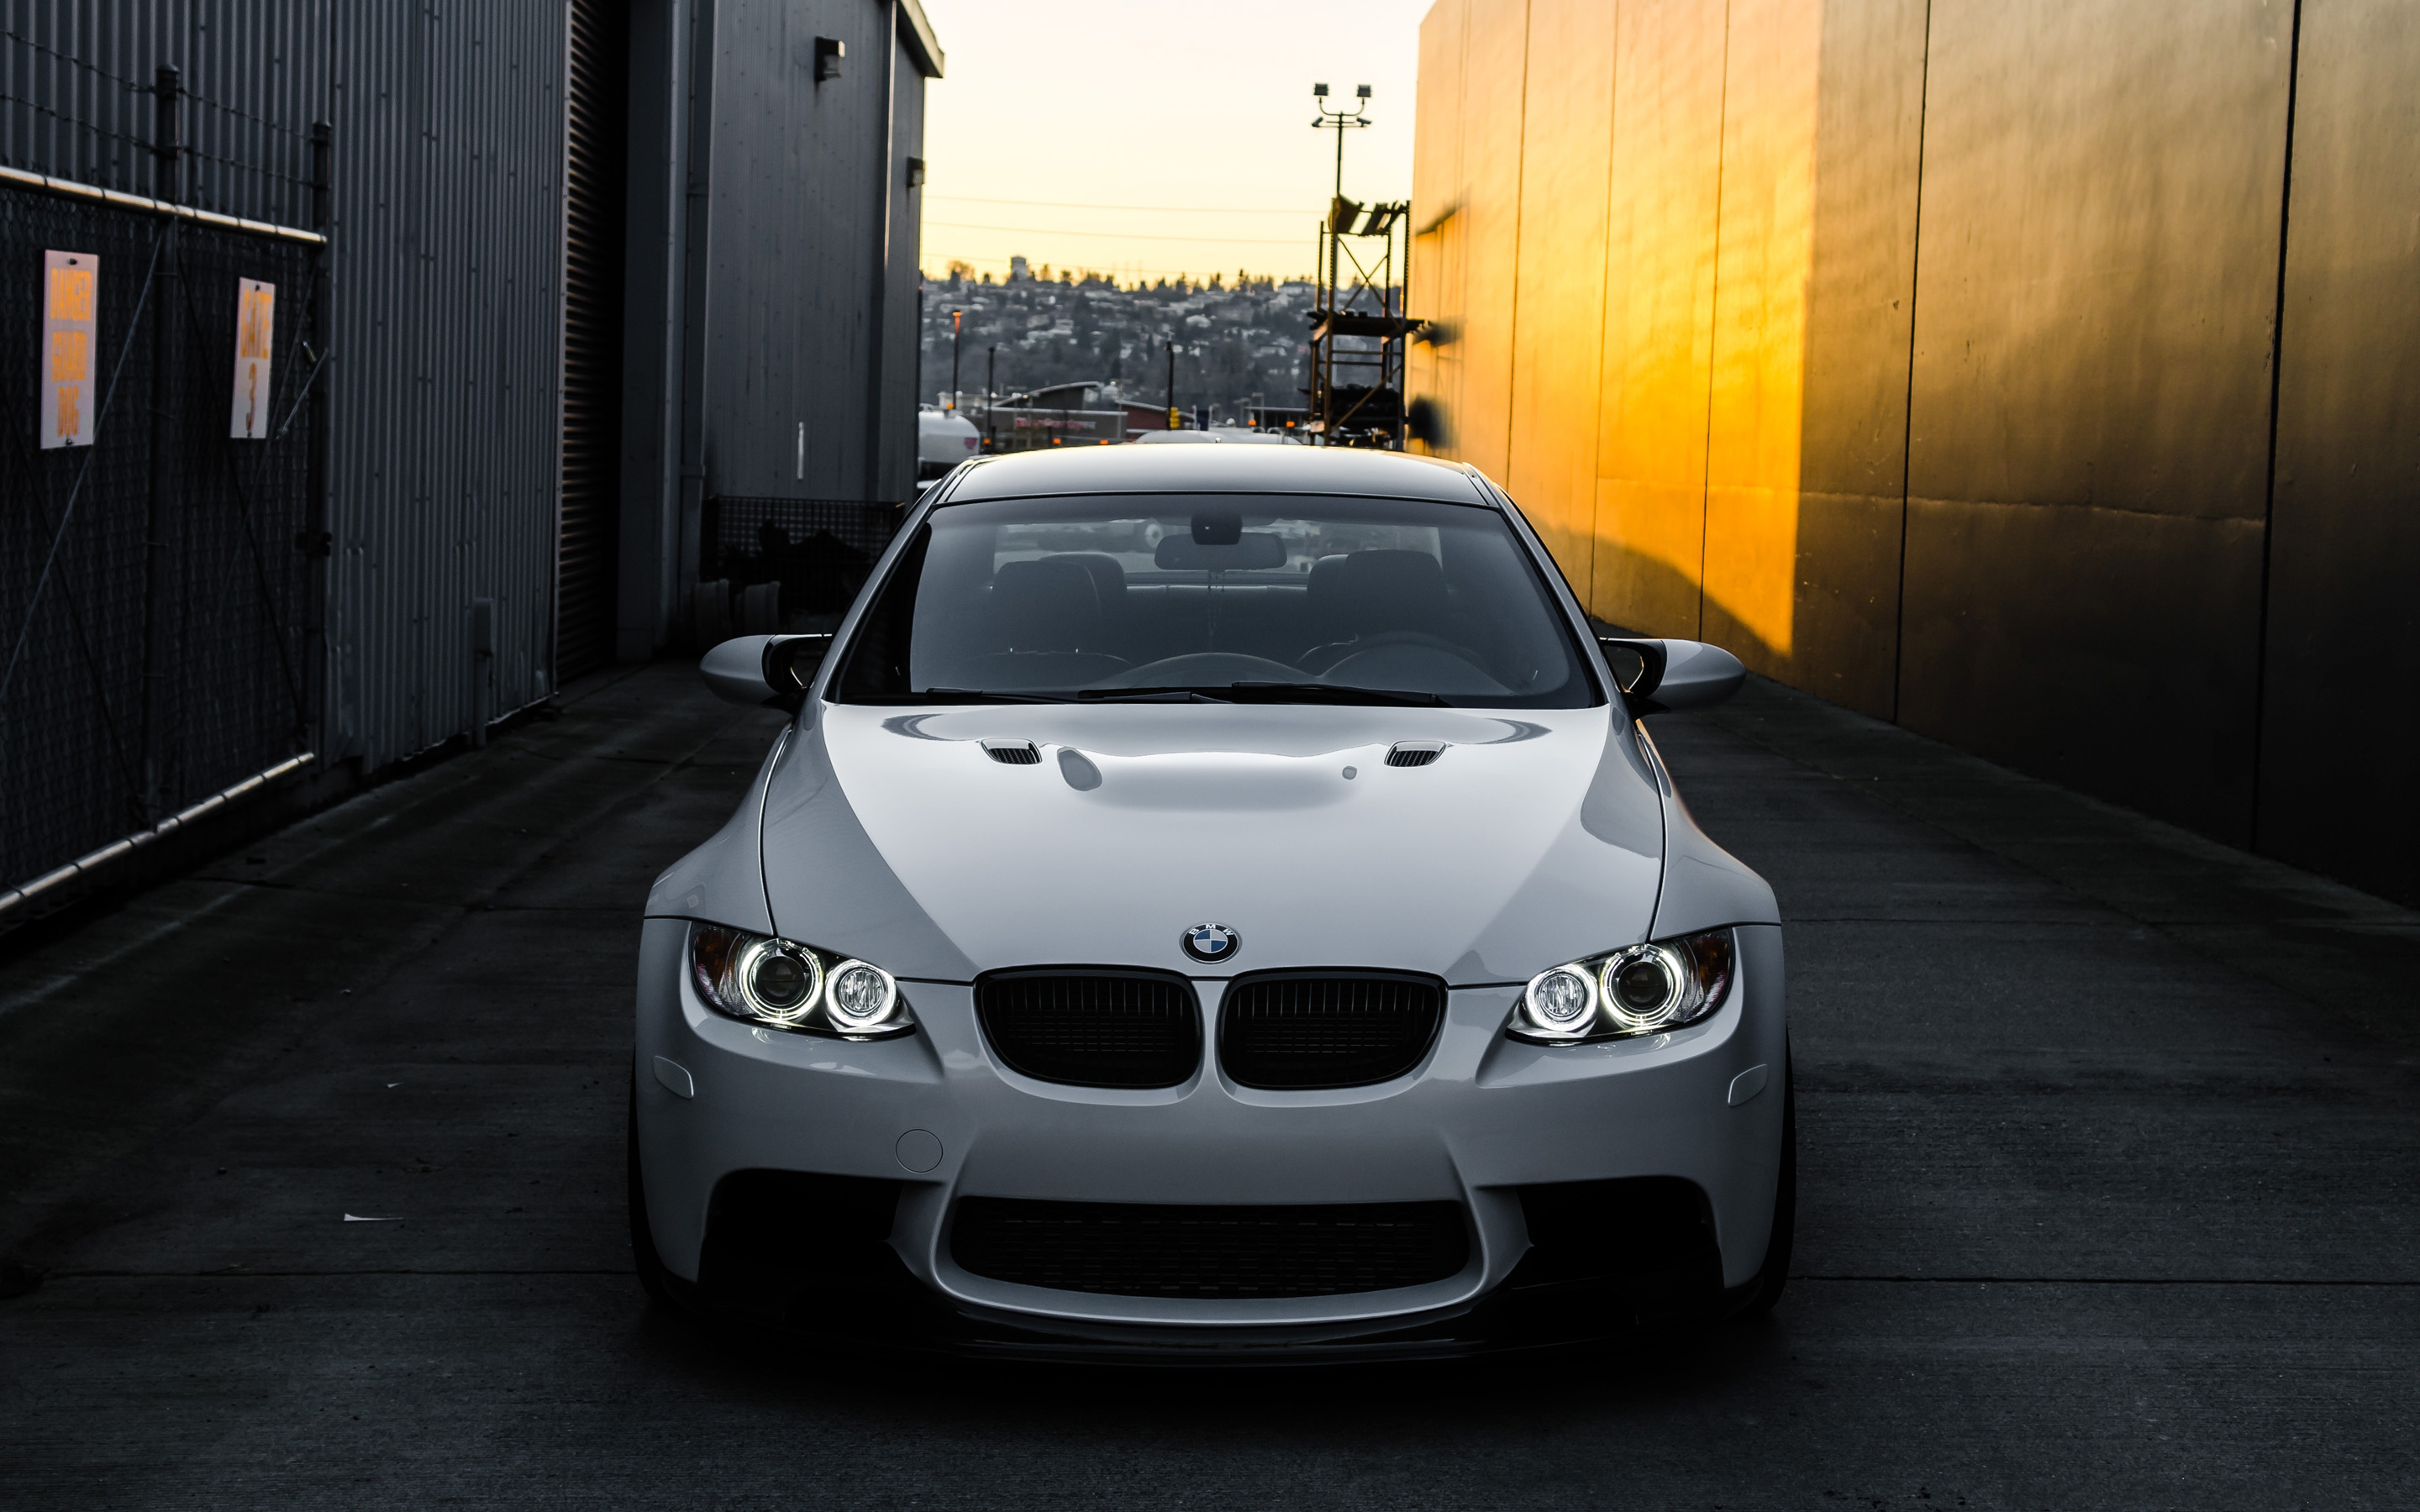 49+] BMW M3 Wallpaper HD Widescreen - WallpaperSafari